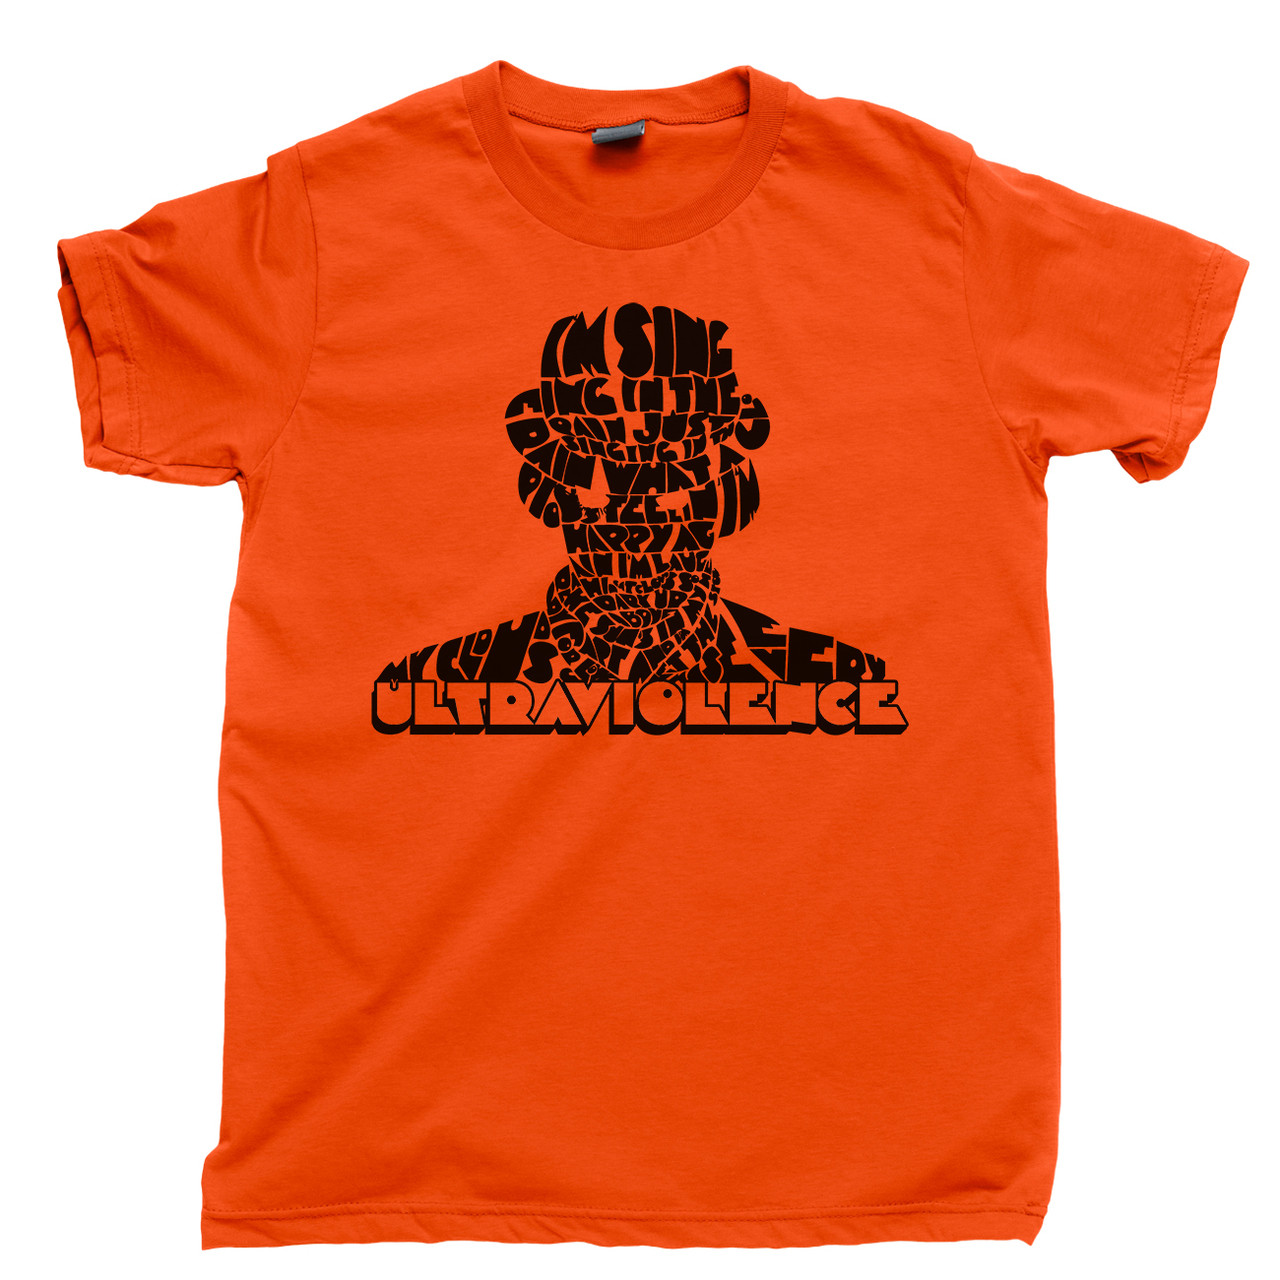 Ultraviolence T Shirt - A Clockwork Orange, Droog, Stanley Kubrick Movie Tee